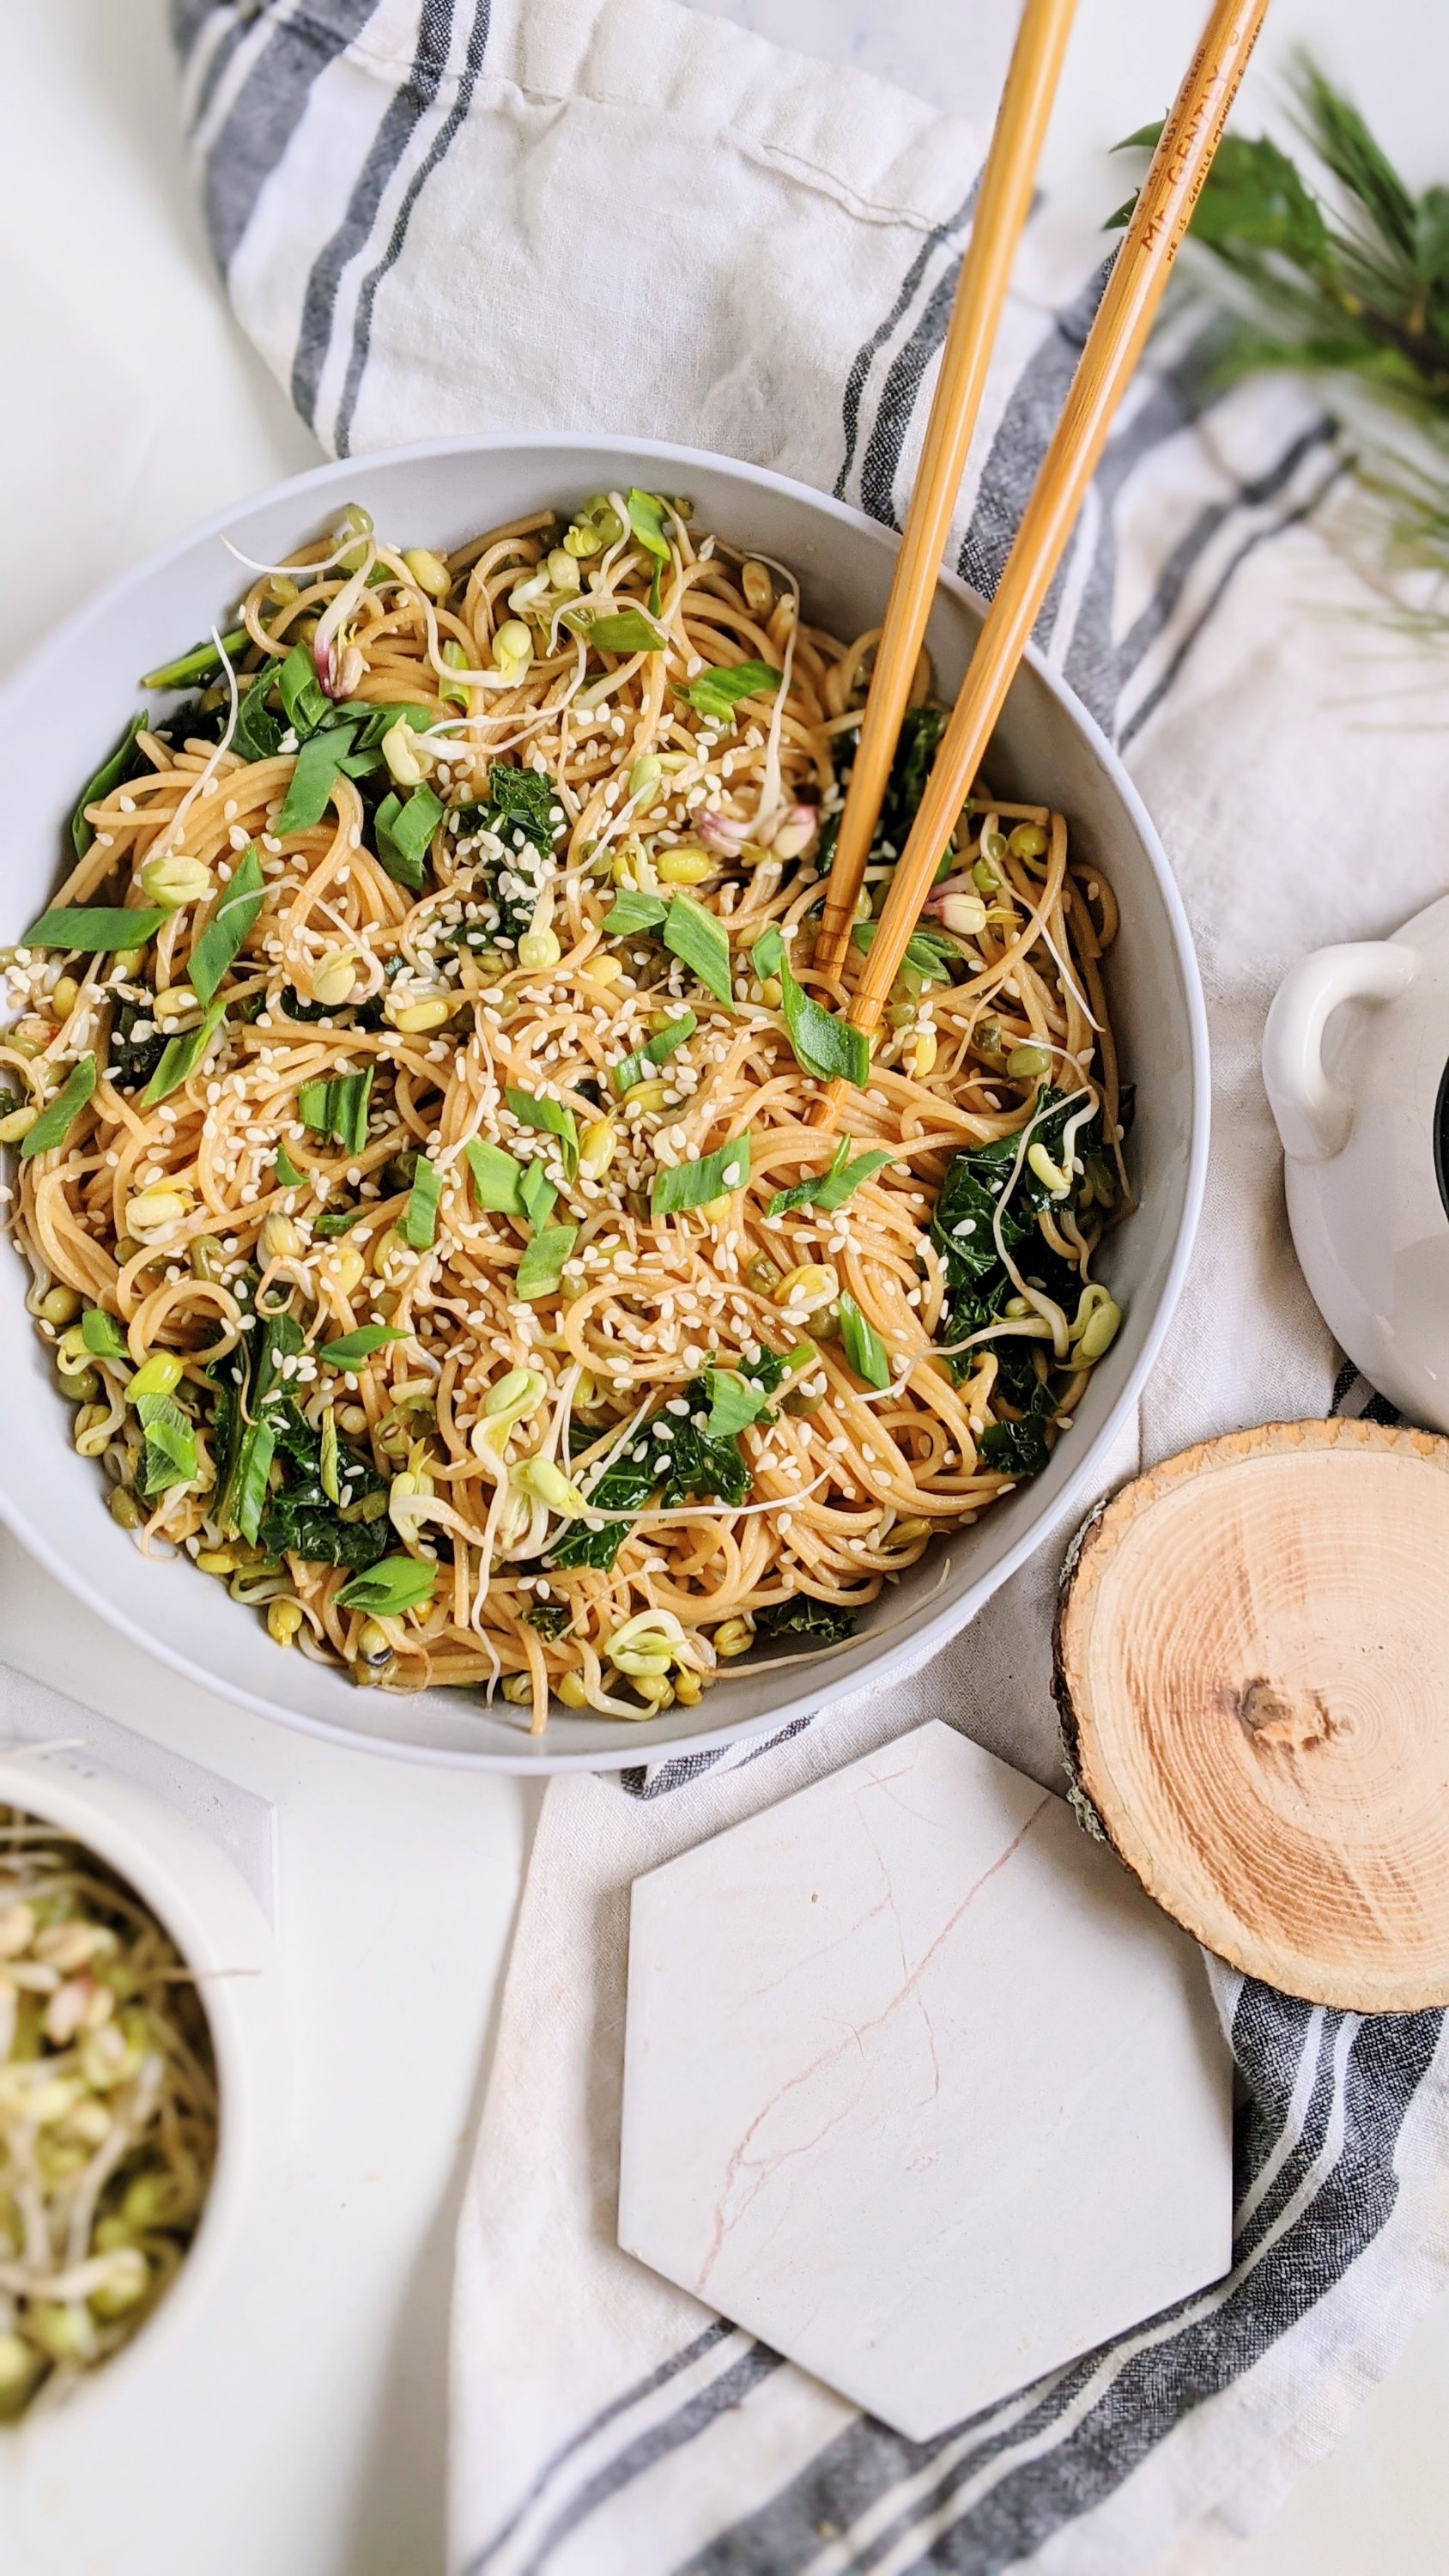 best vegan garlic noodles recipe rready in 15 minutes healthy recipes under 30 minutes pasta noodles asian inspired vegan vegetarian meatless gluten free